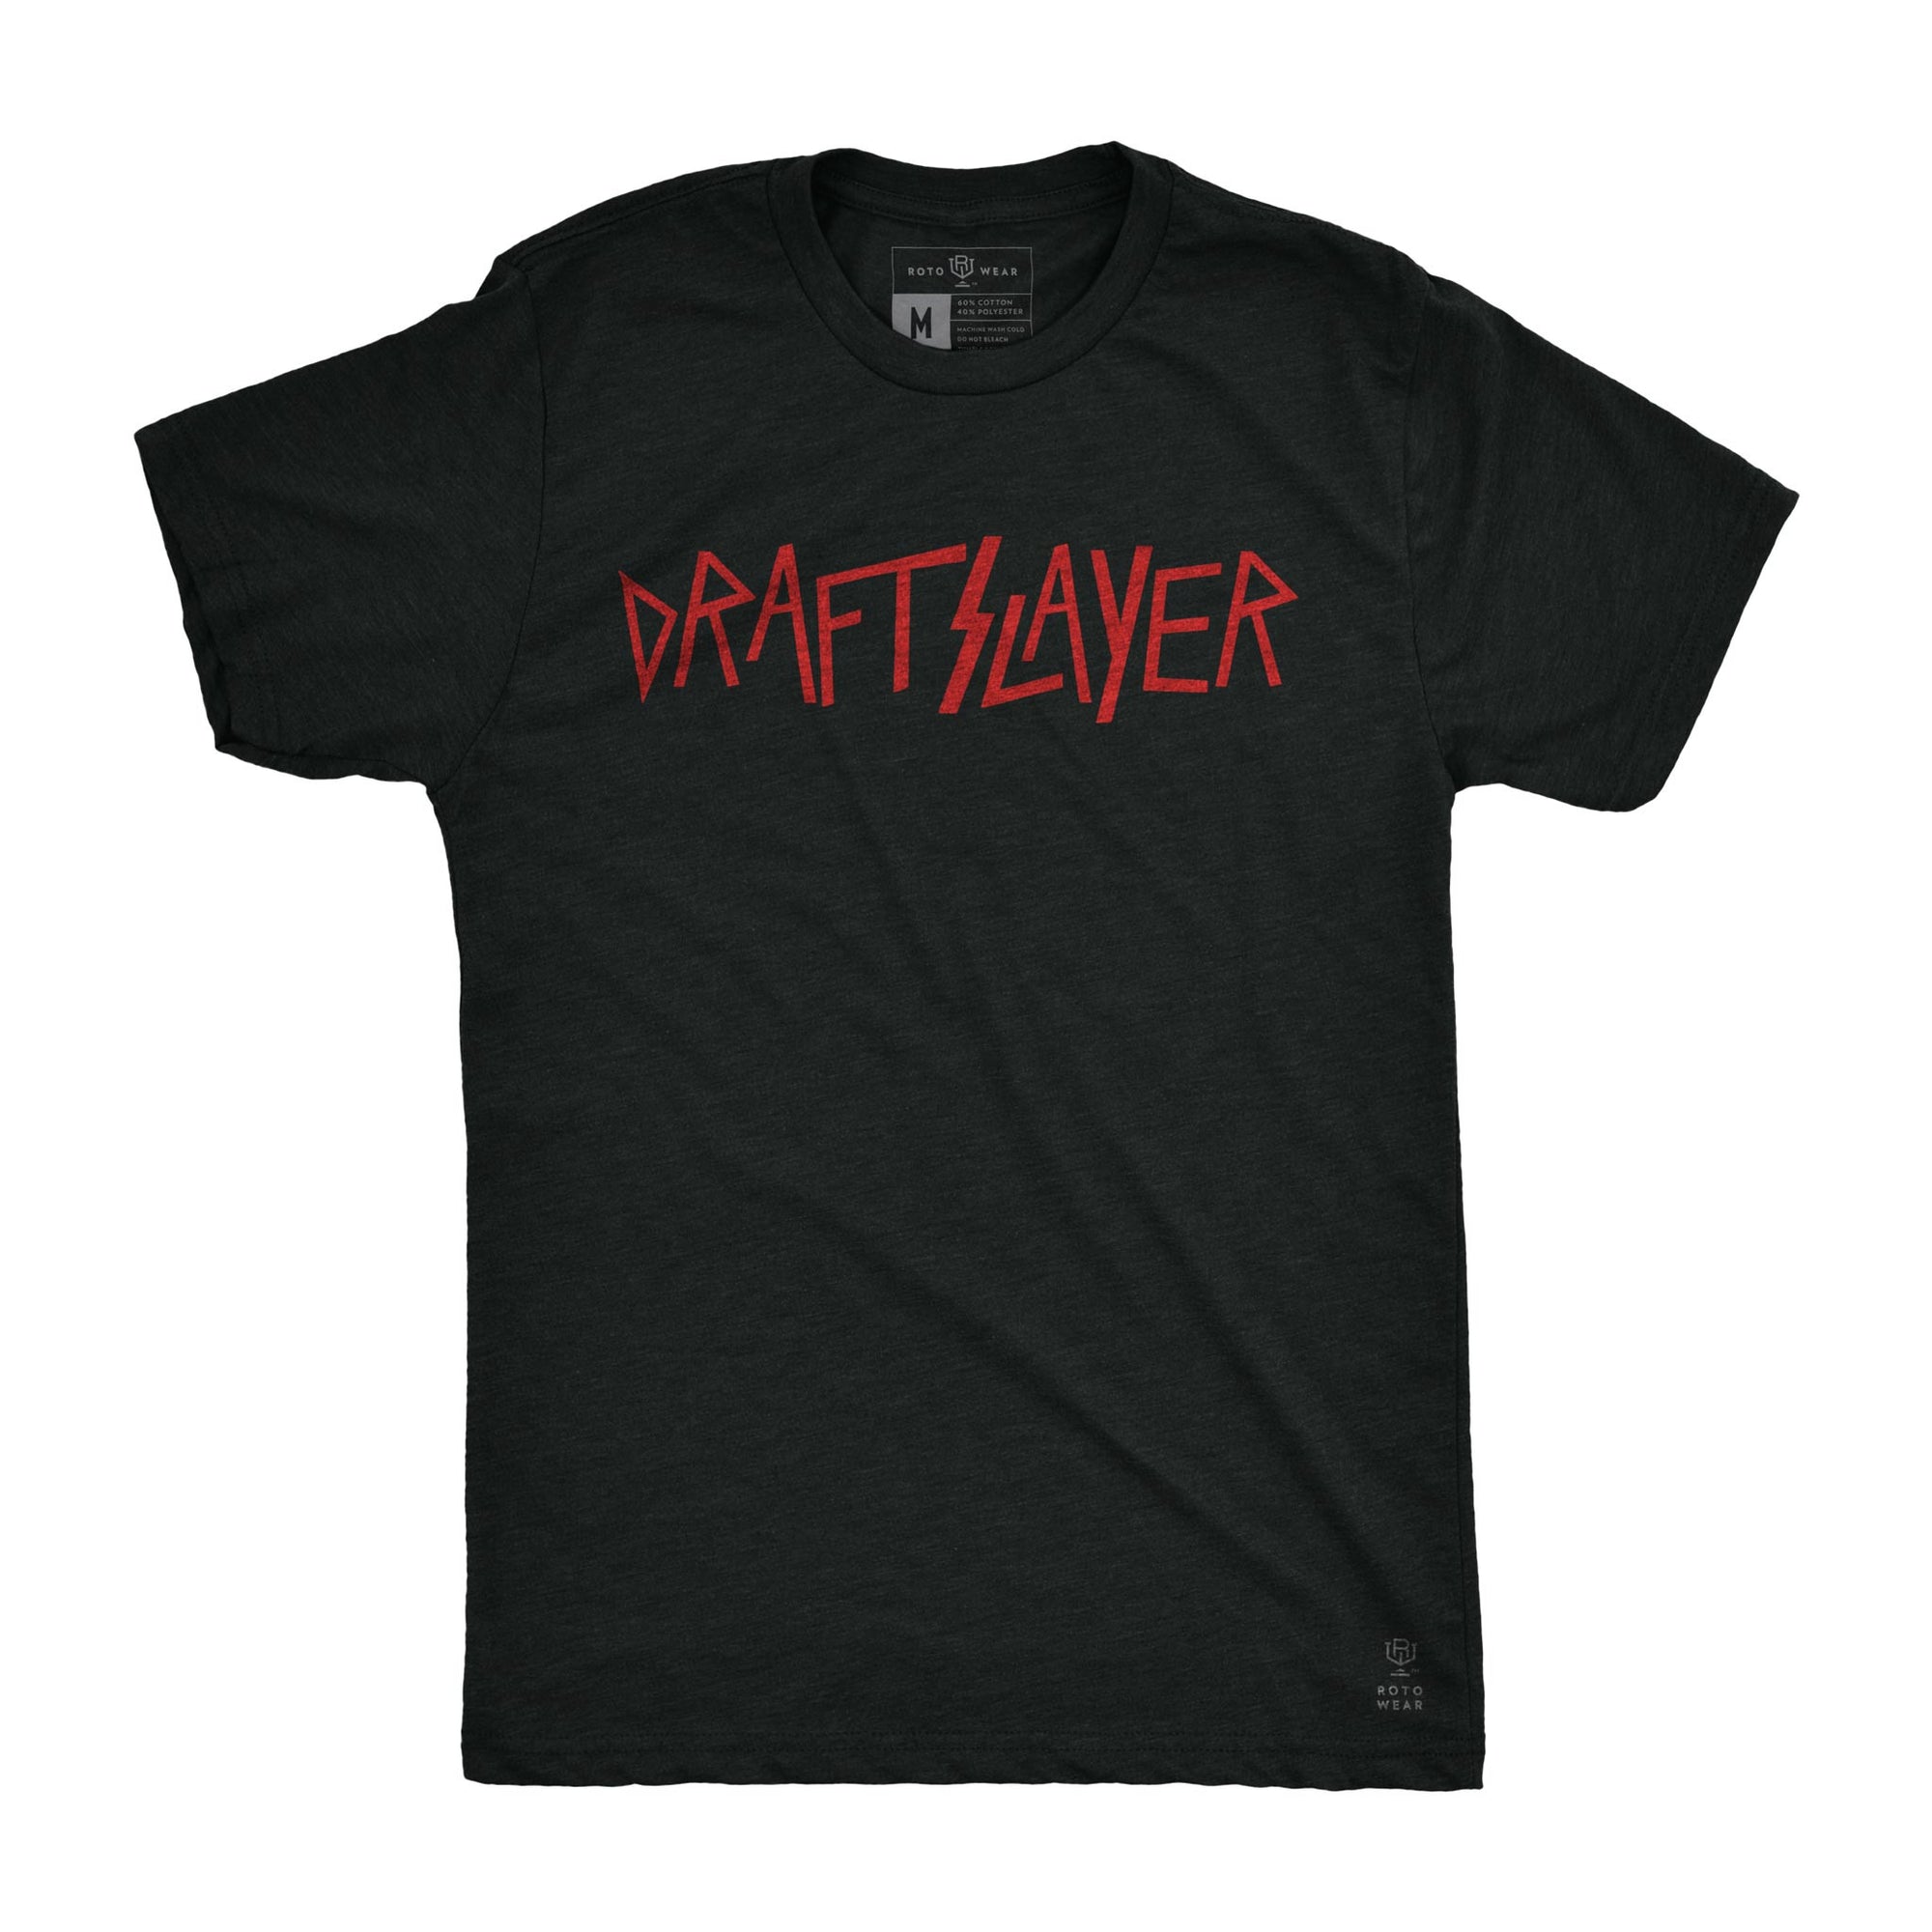 Draftslayer men’s t-shirt by RotoWear for fantasy football, fantasy baseball, fantasy hockey and fantasy basketball managers who draft like a rockstar